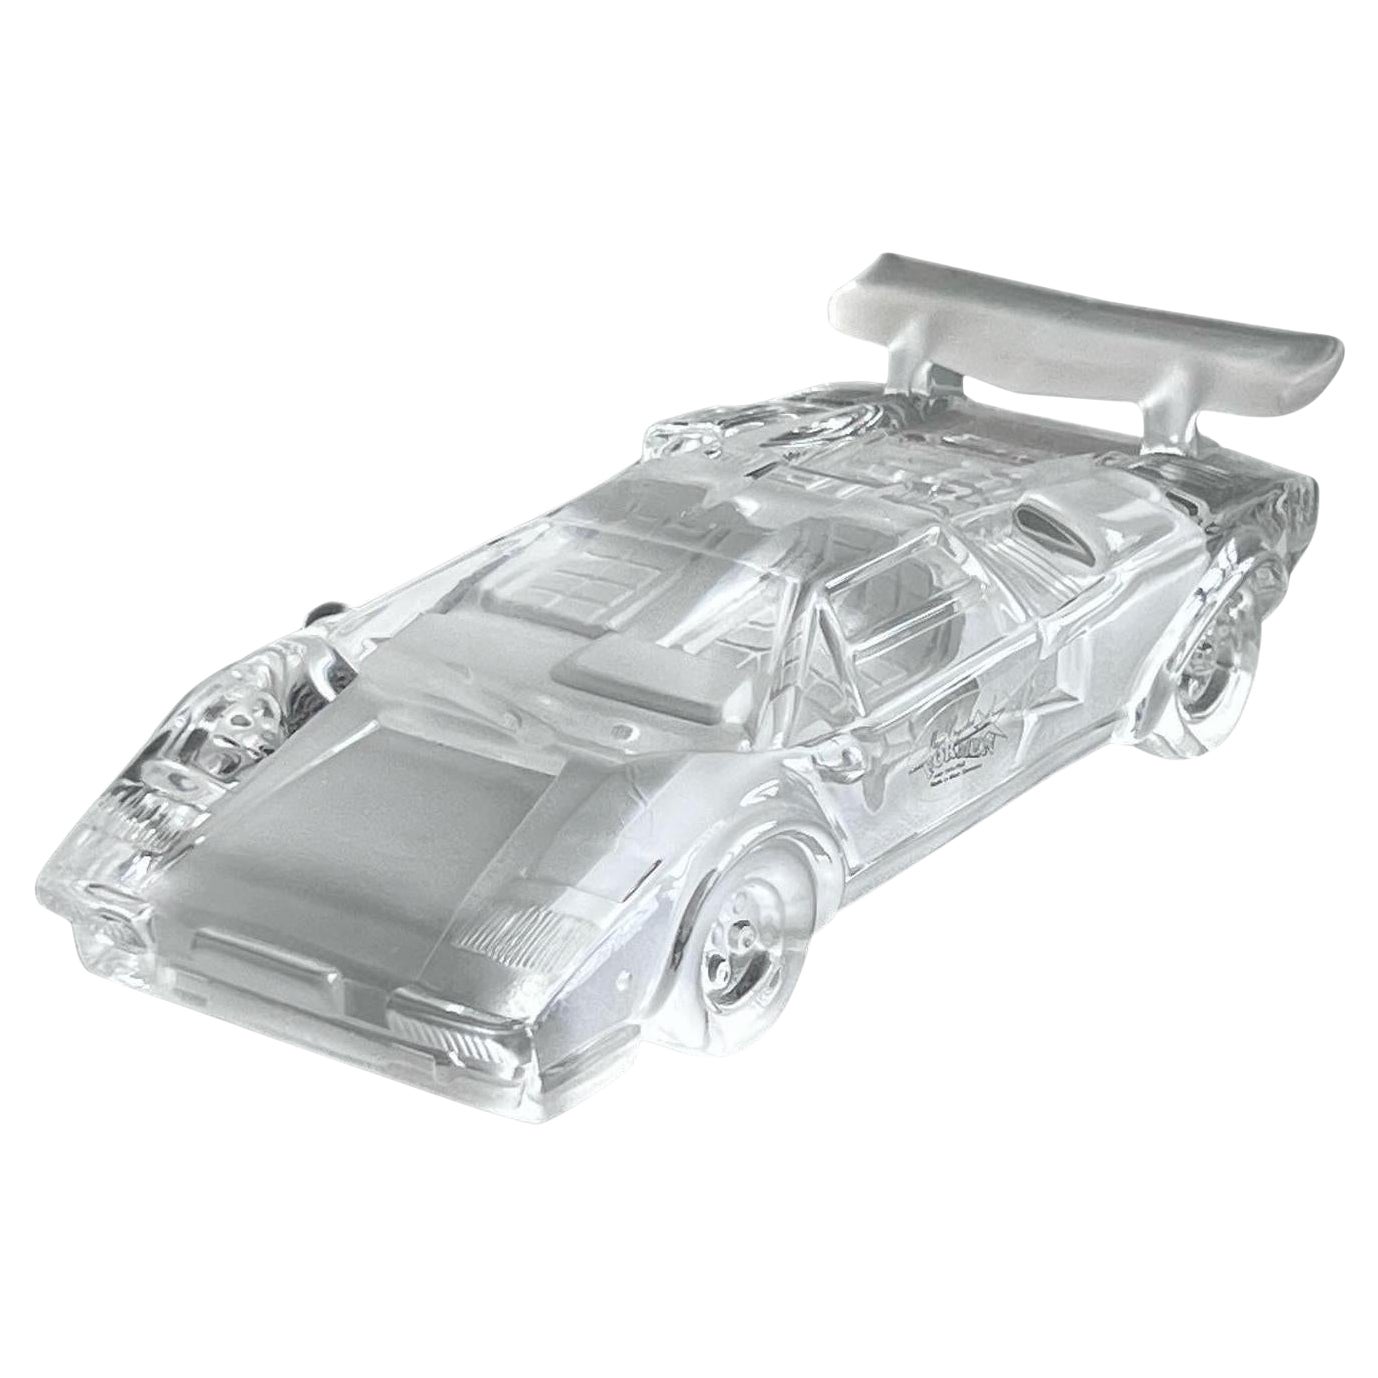 Lamborghini-Countach-Modellwagen aus klarem Kristall, dekoratives Stück, hergestellt in Italien